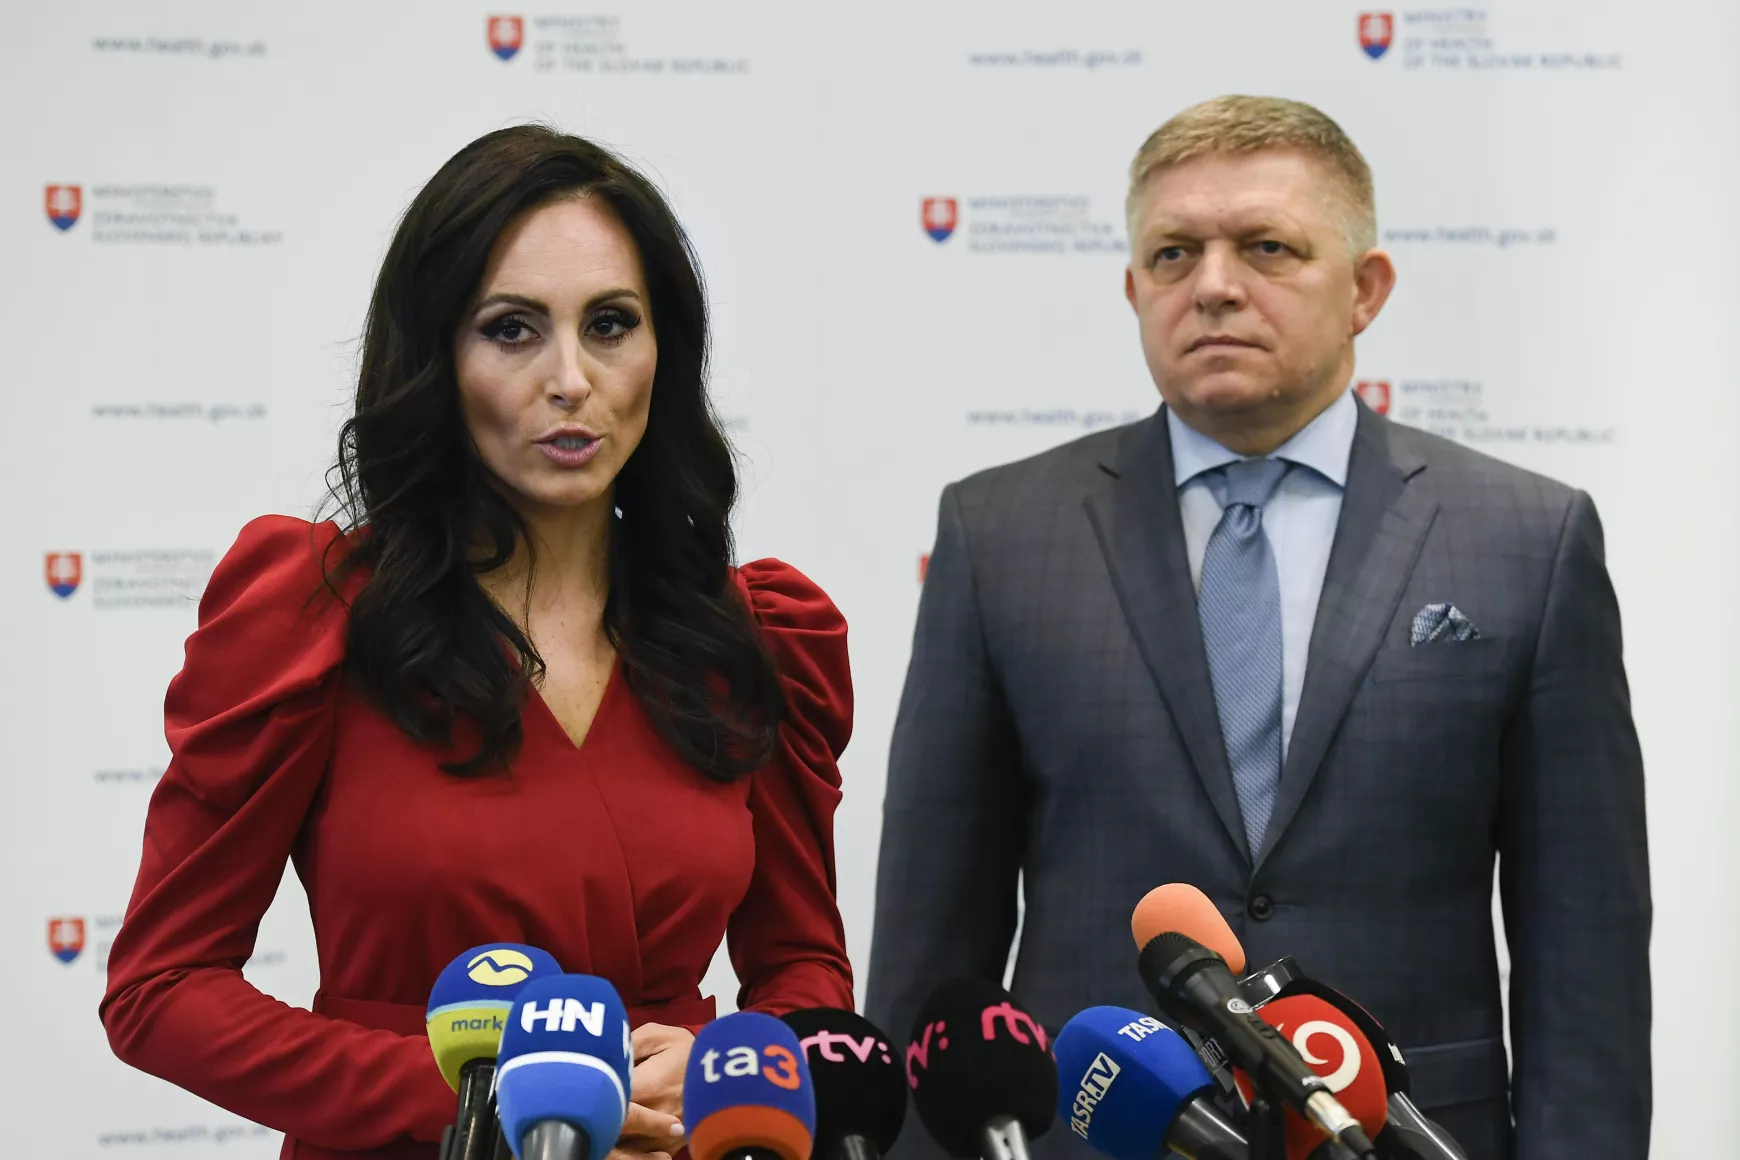 Zuzana Dolinková és Robert Fico